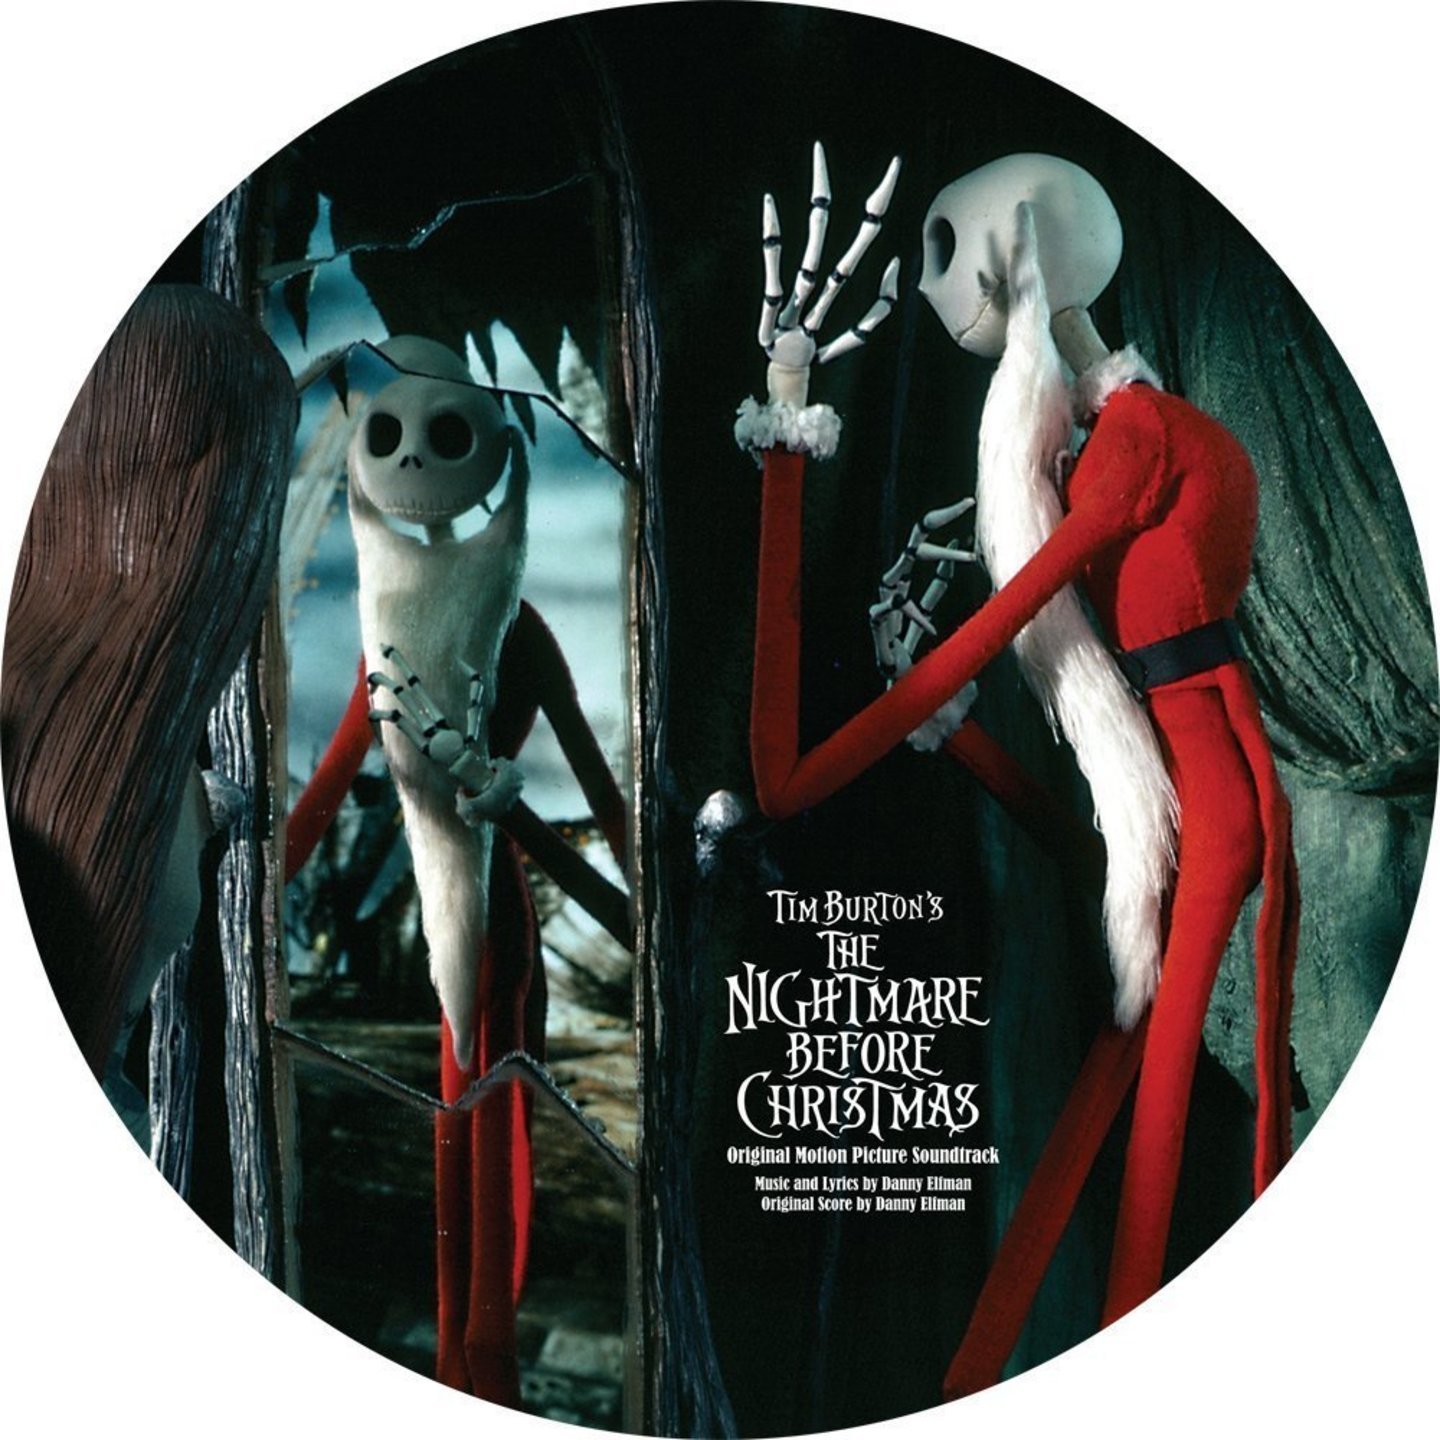 VA - The Nightmare Before Christmas Original Motion Picture Soundtrack 2xLP Picture Vinyl